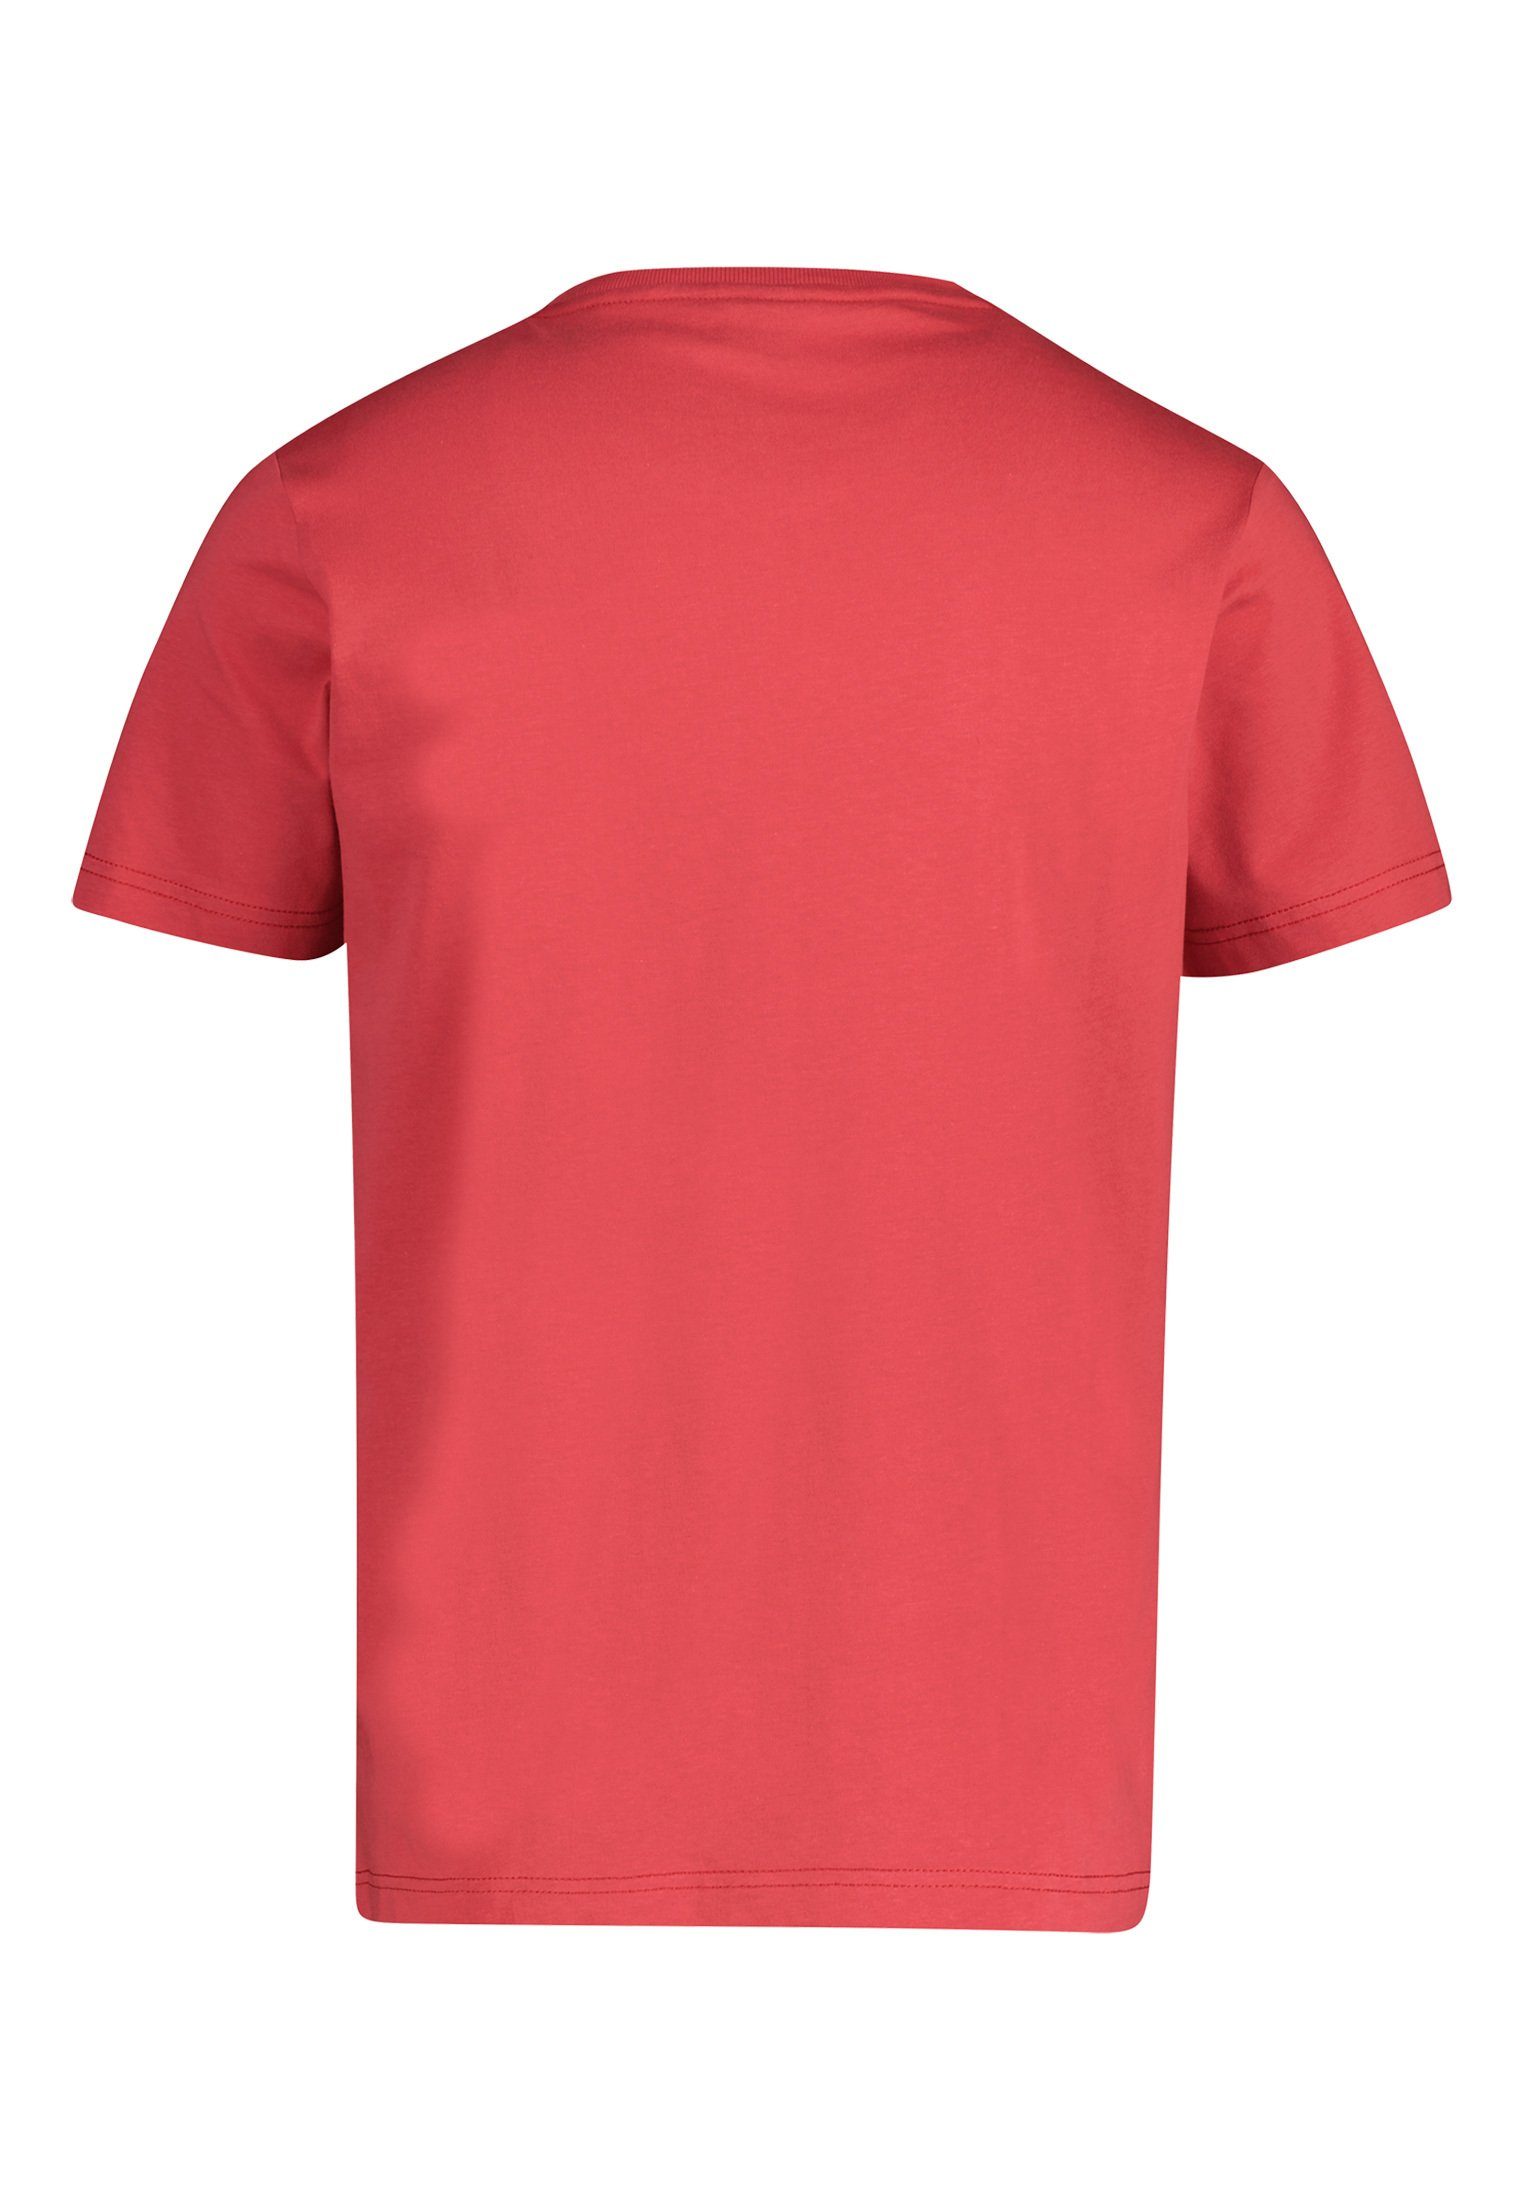 T-Shirt mit ROSE DUSTY Logo LERROS LERROS T-Shirt